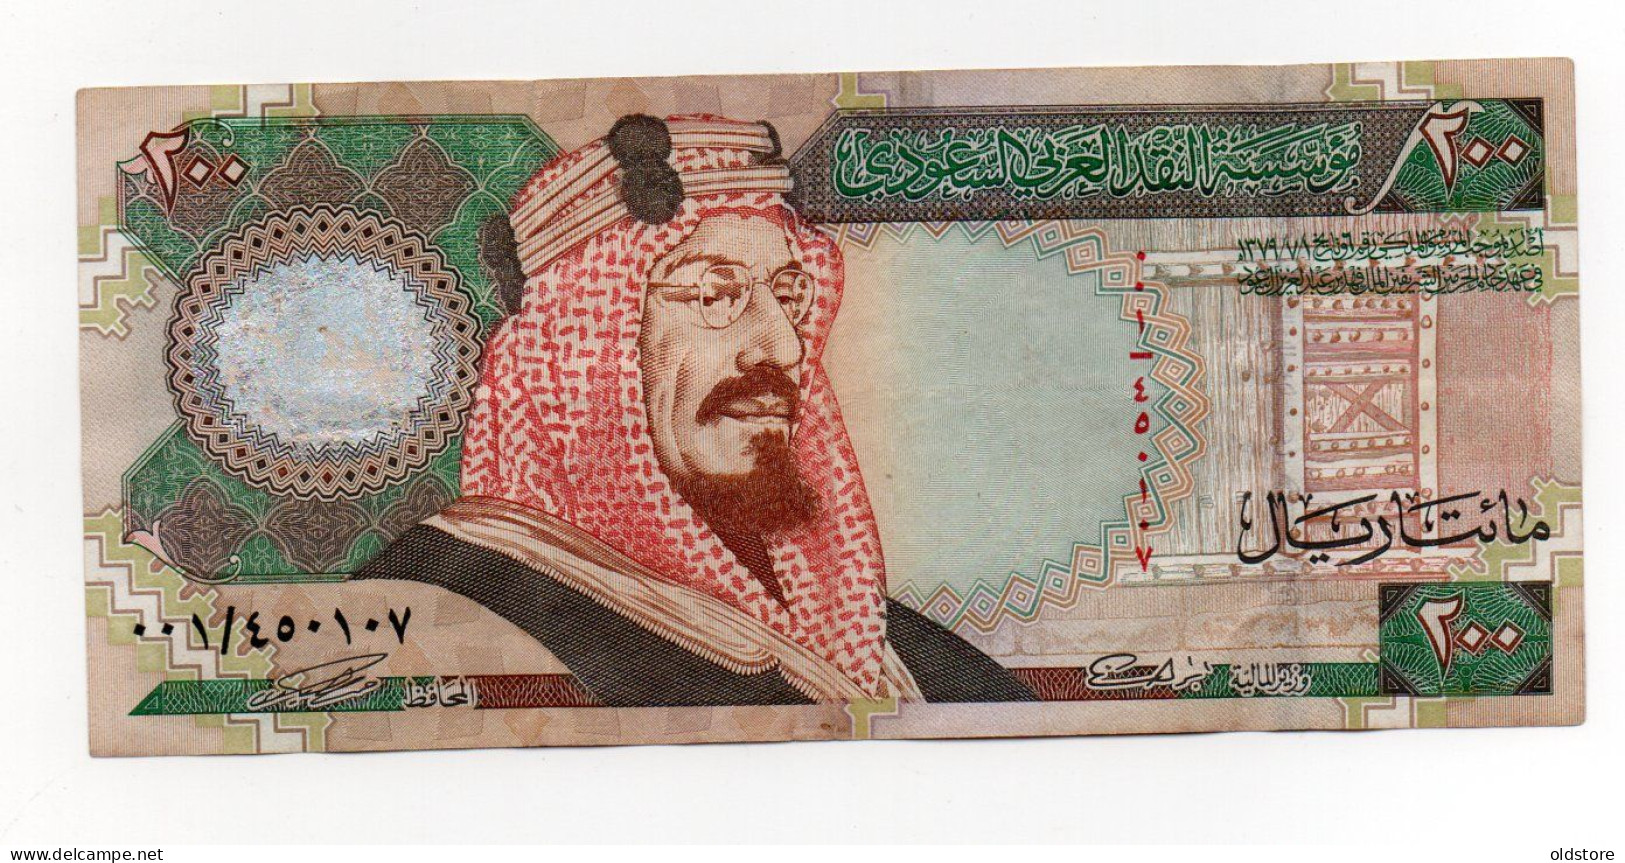 Saudi Arabia Banknotes 200 Riyals - ND 2000 -  First Prefix 001 Rare - Used Condition - Arabia Saudita